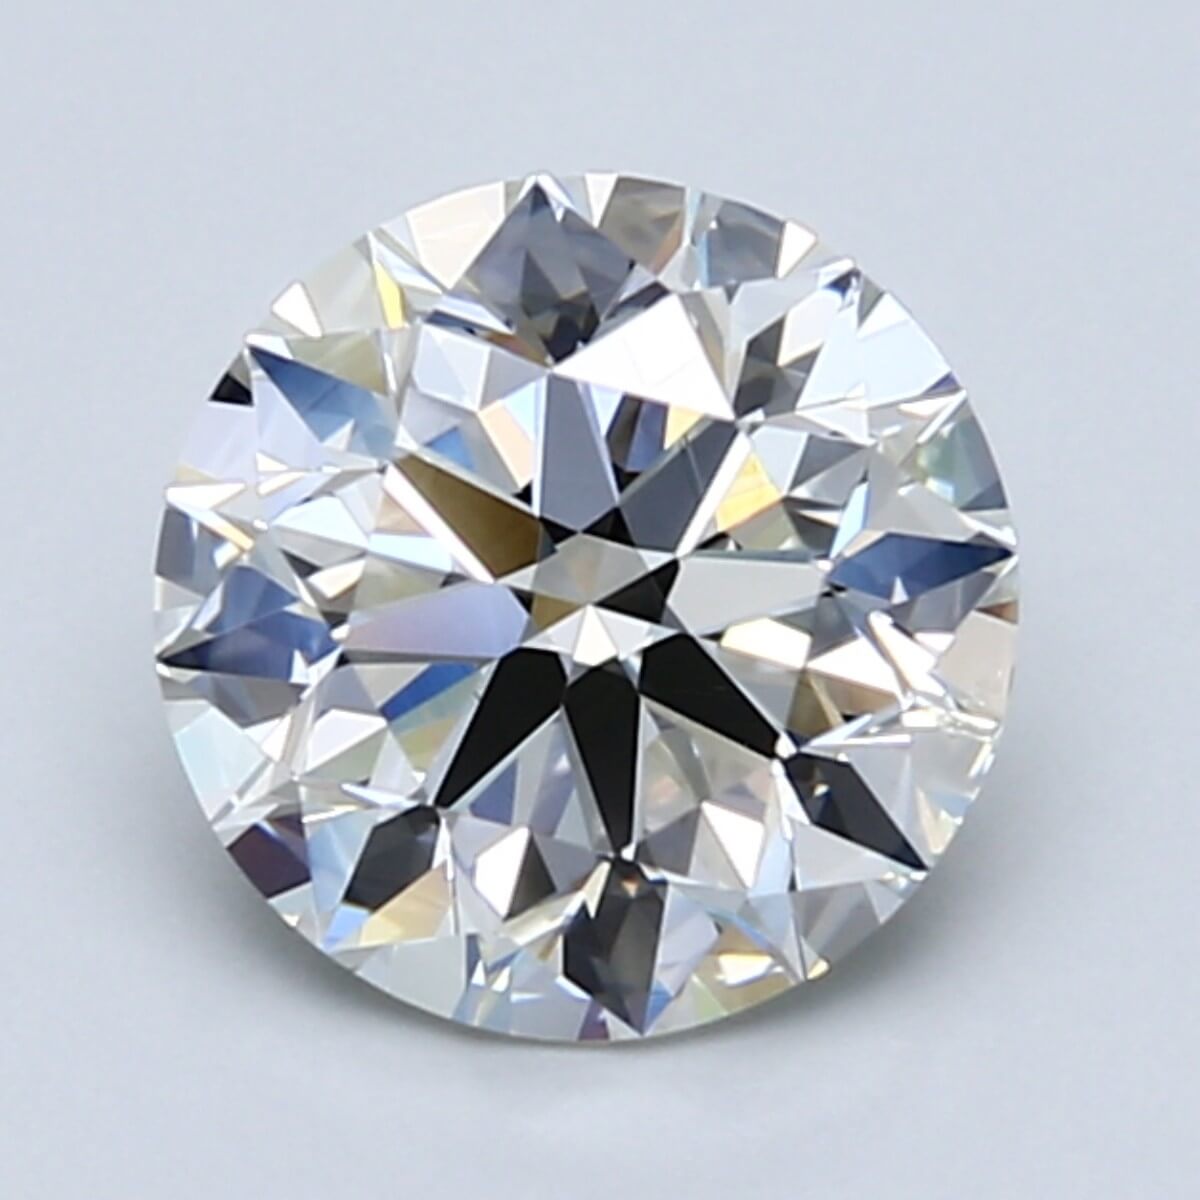 SI1 clarity diamond with high cut score